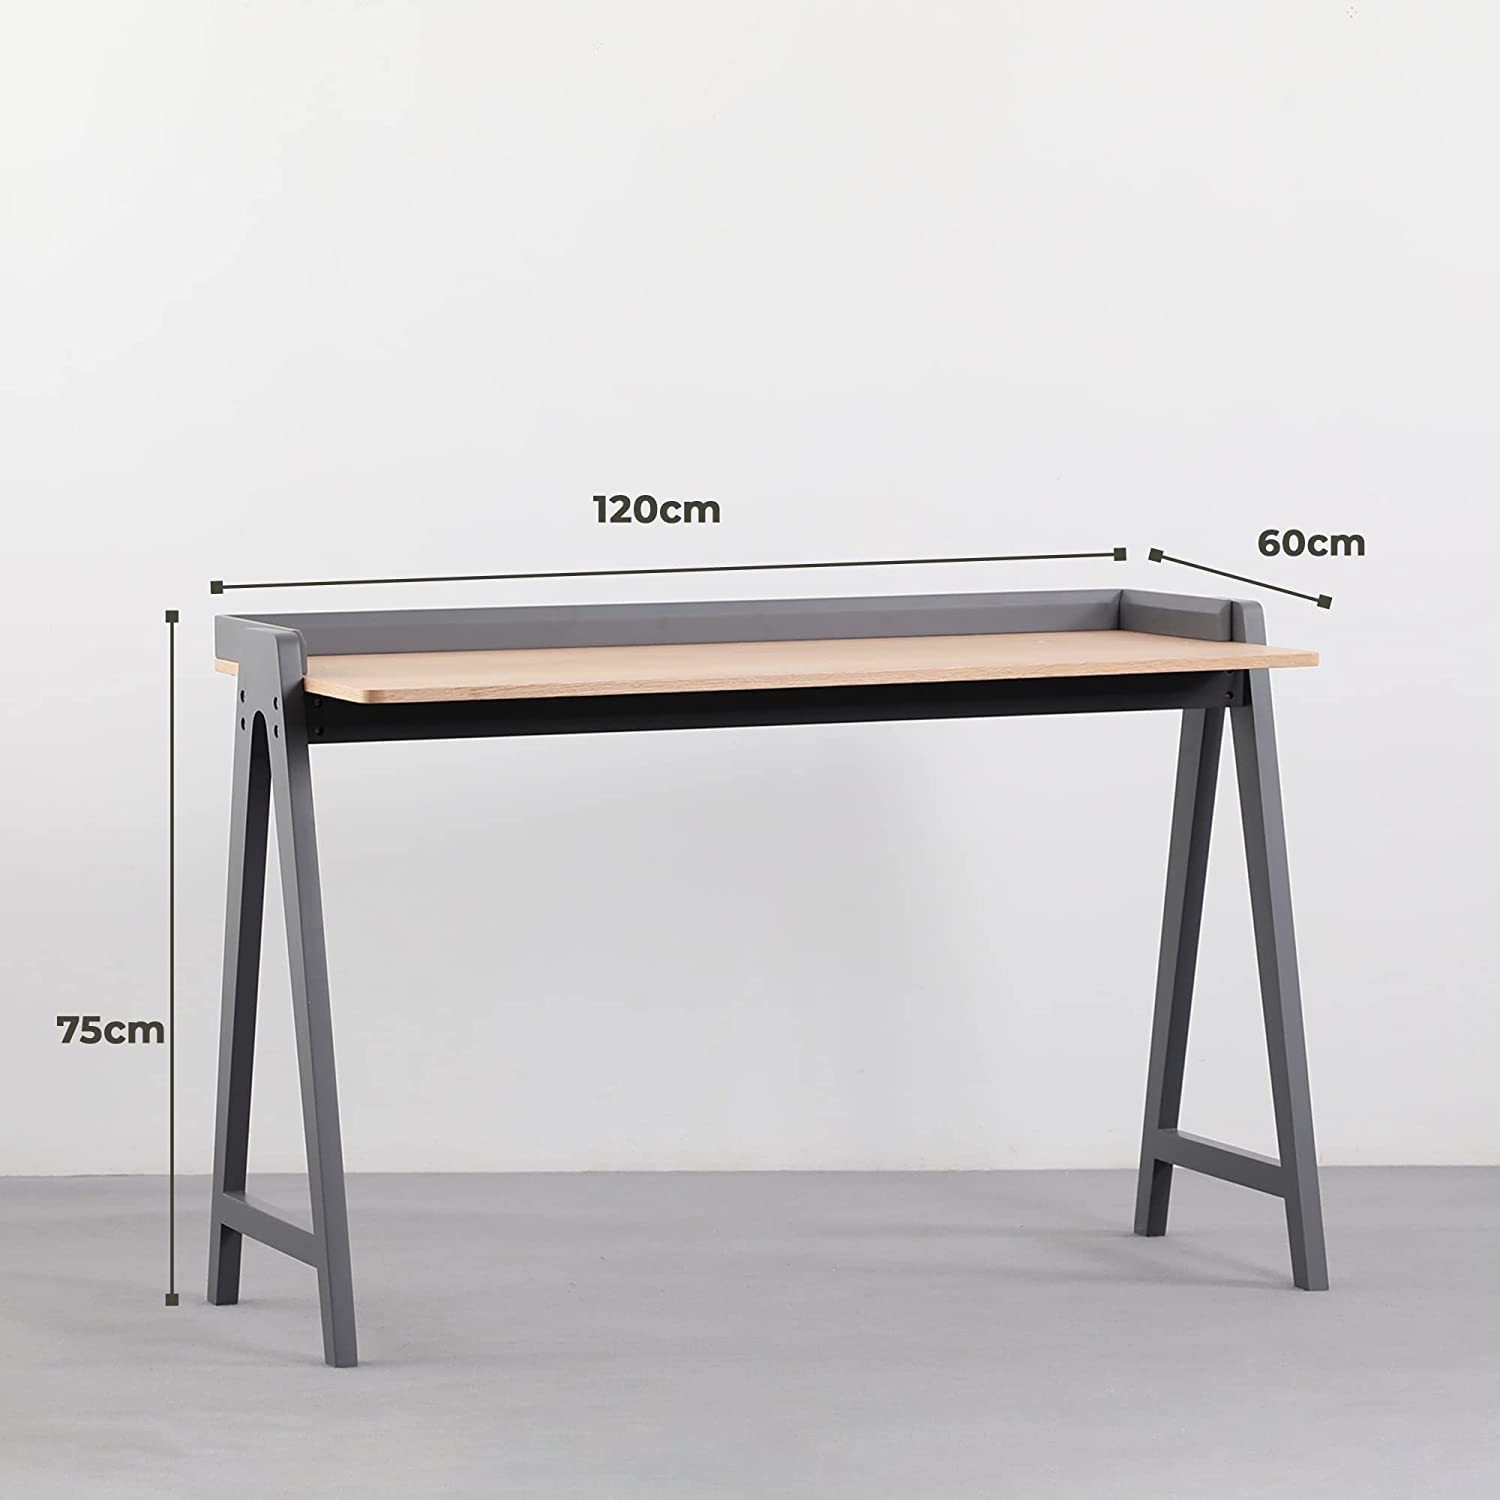 KAI Desk, Modern Nordic Desk, Study desk, Computer Desk, Study Table for home office with Solid Wood Base & Oak Top By Daamudi oak-black